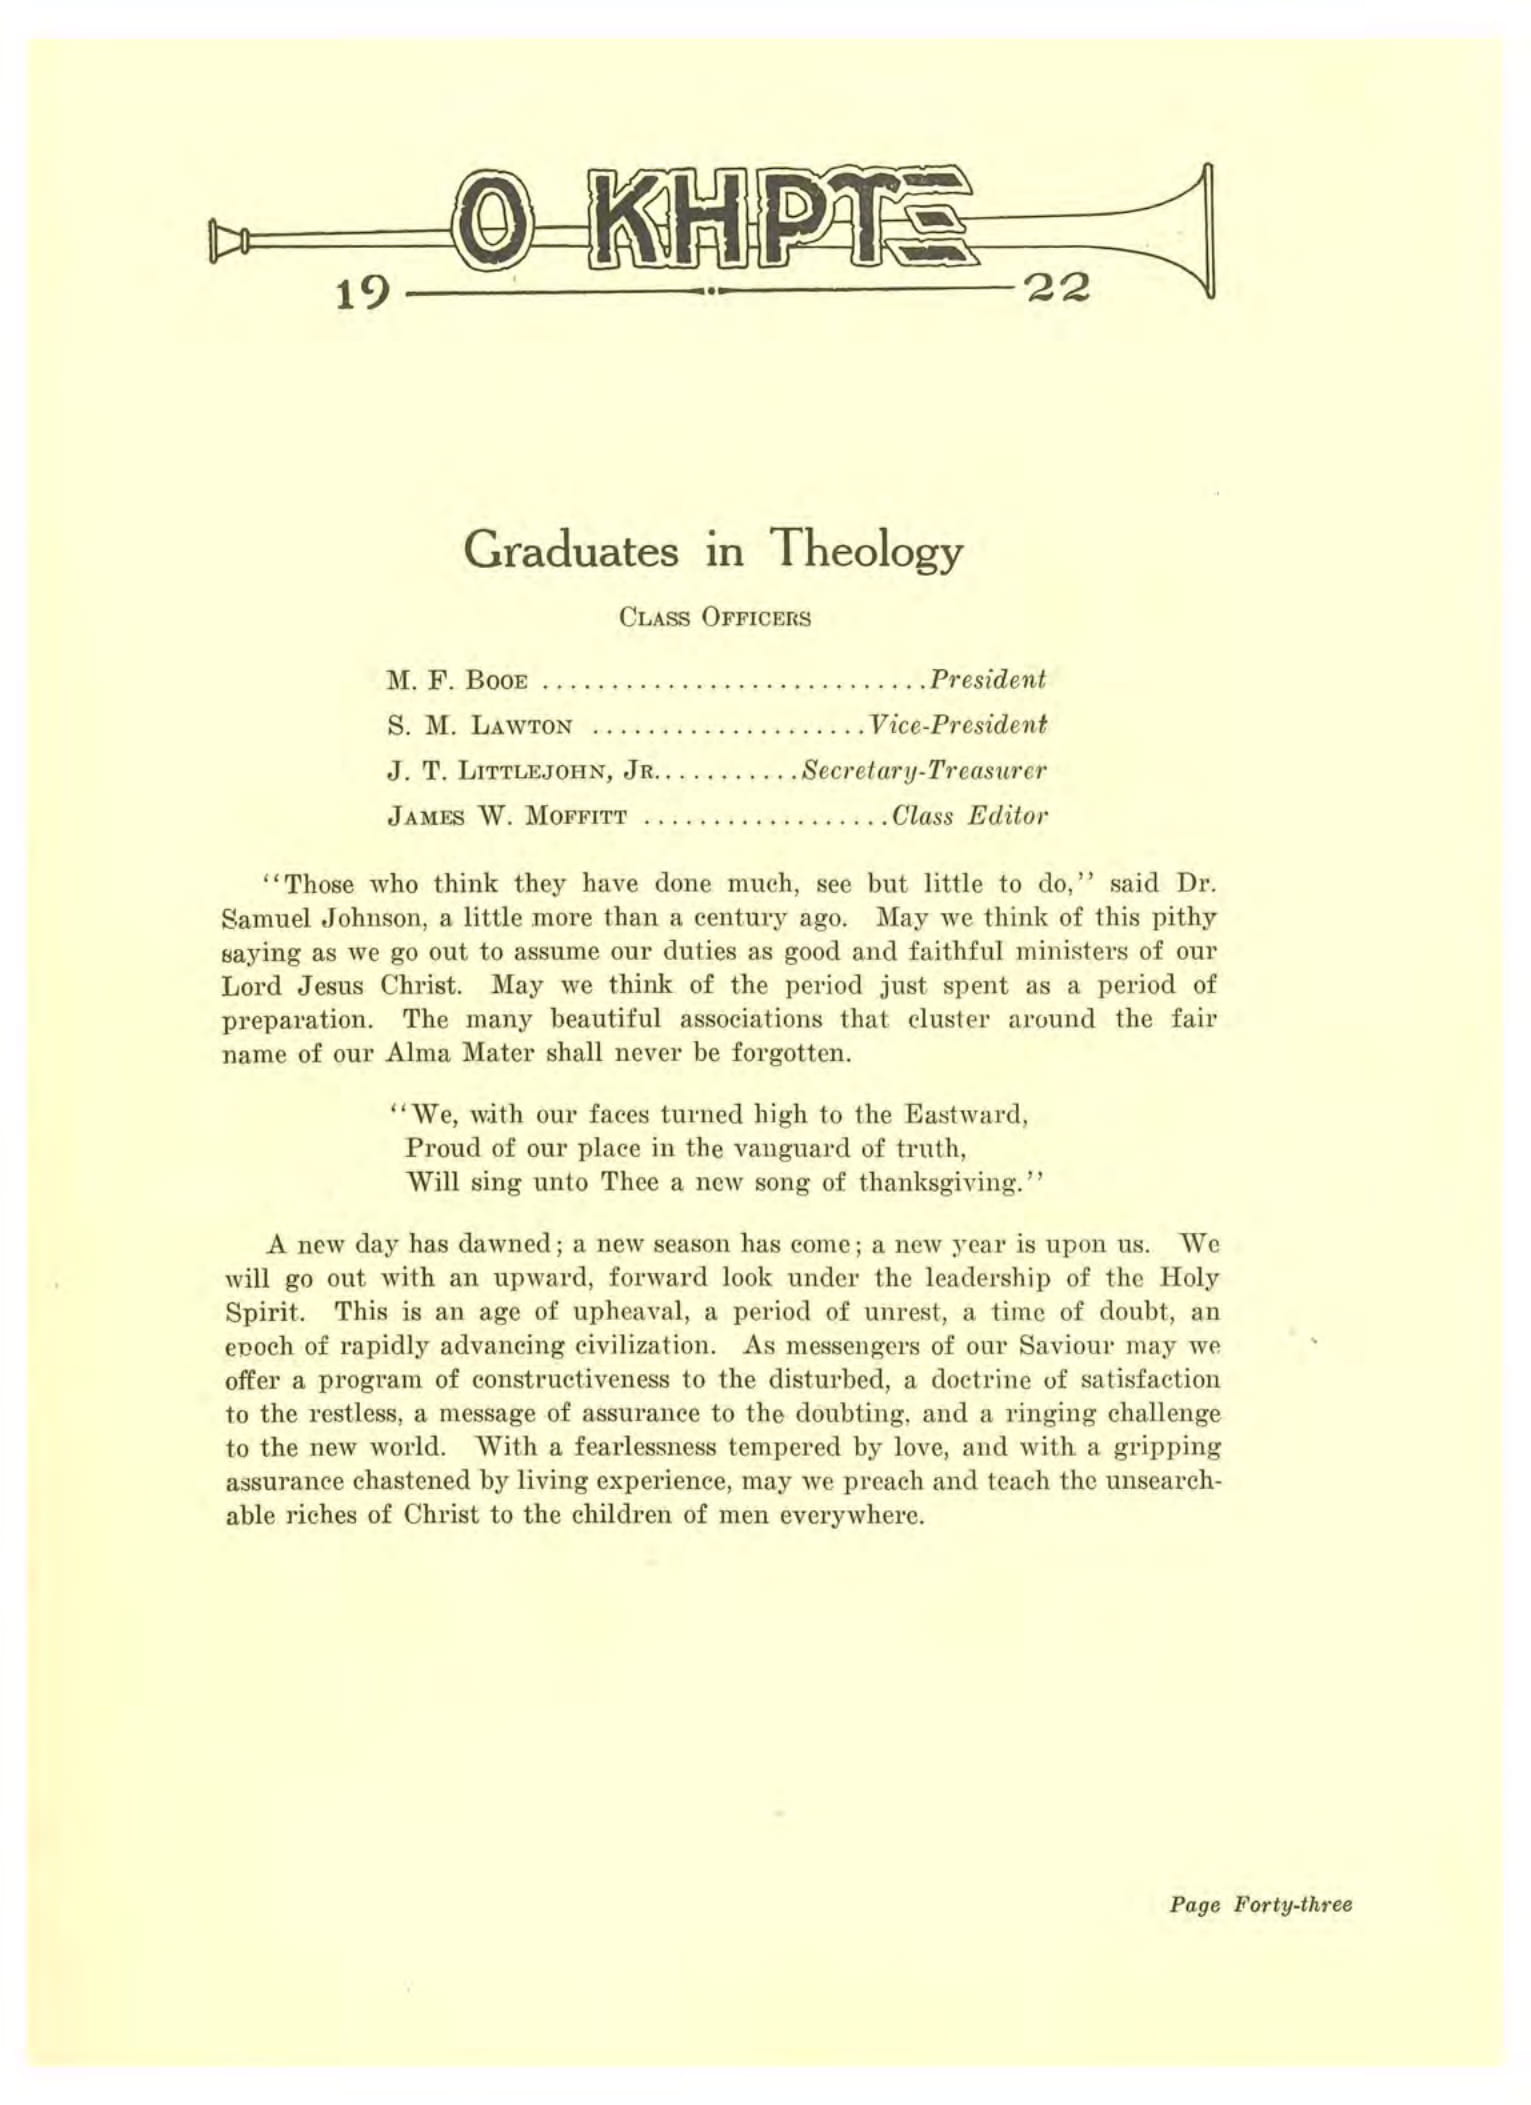 Southern Seminary annual (O Kerux) 1922-049.jpg